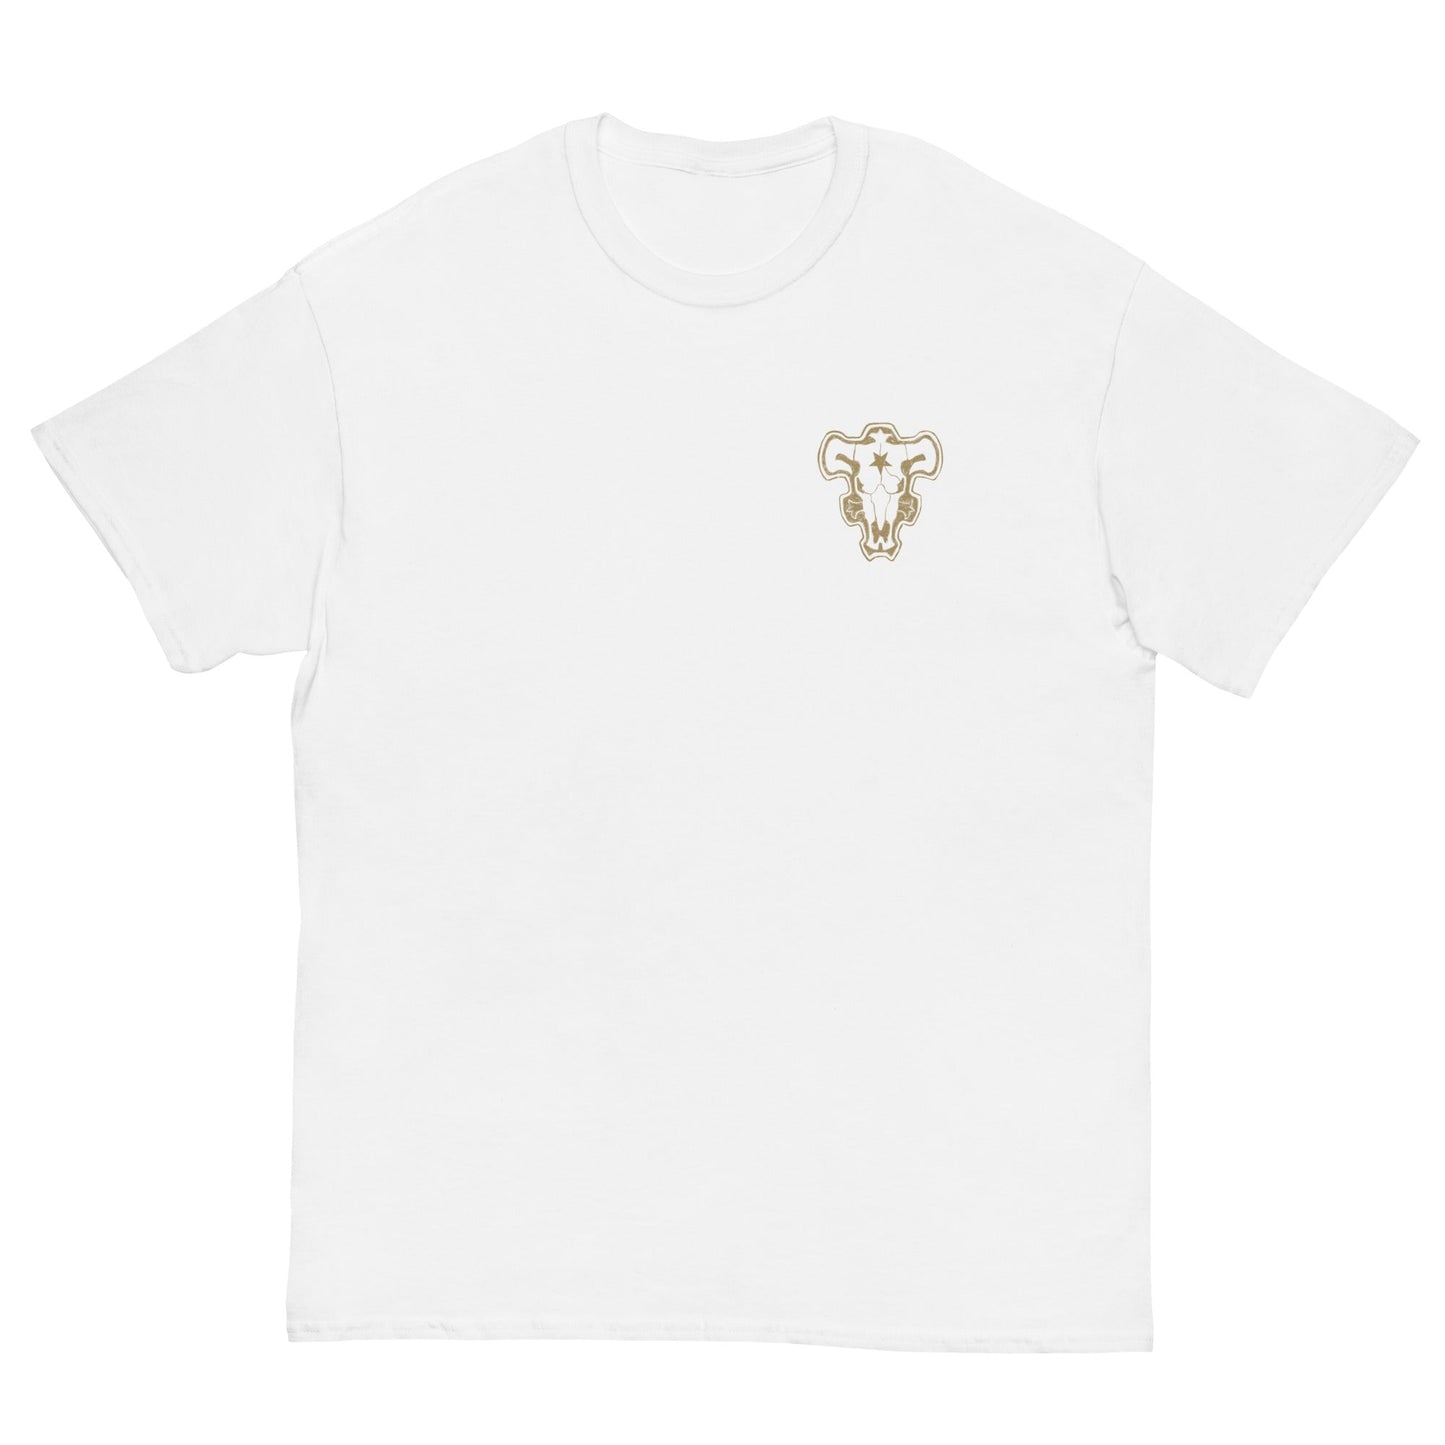 Bulls - T-Shirt - Project NuMa - T-Shirt